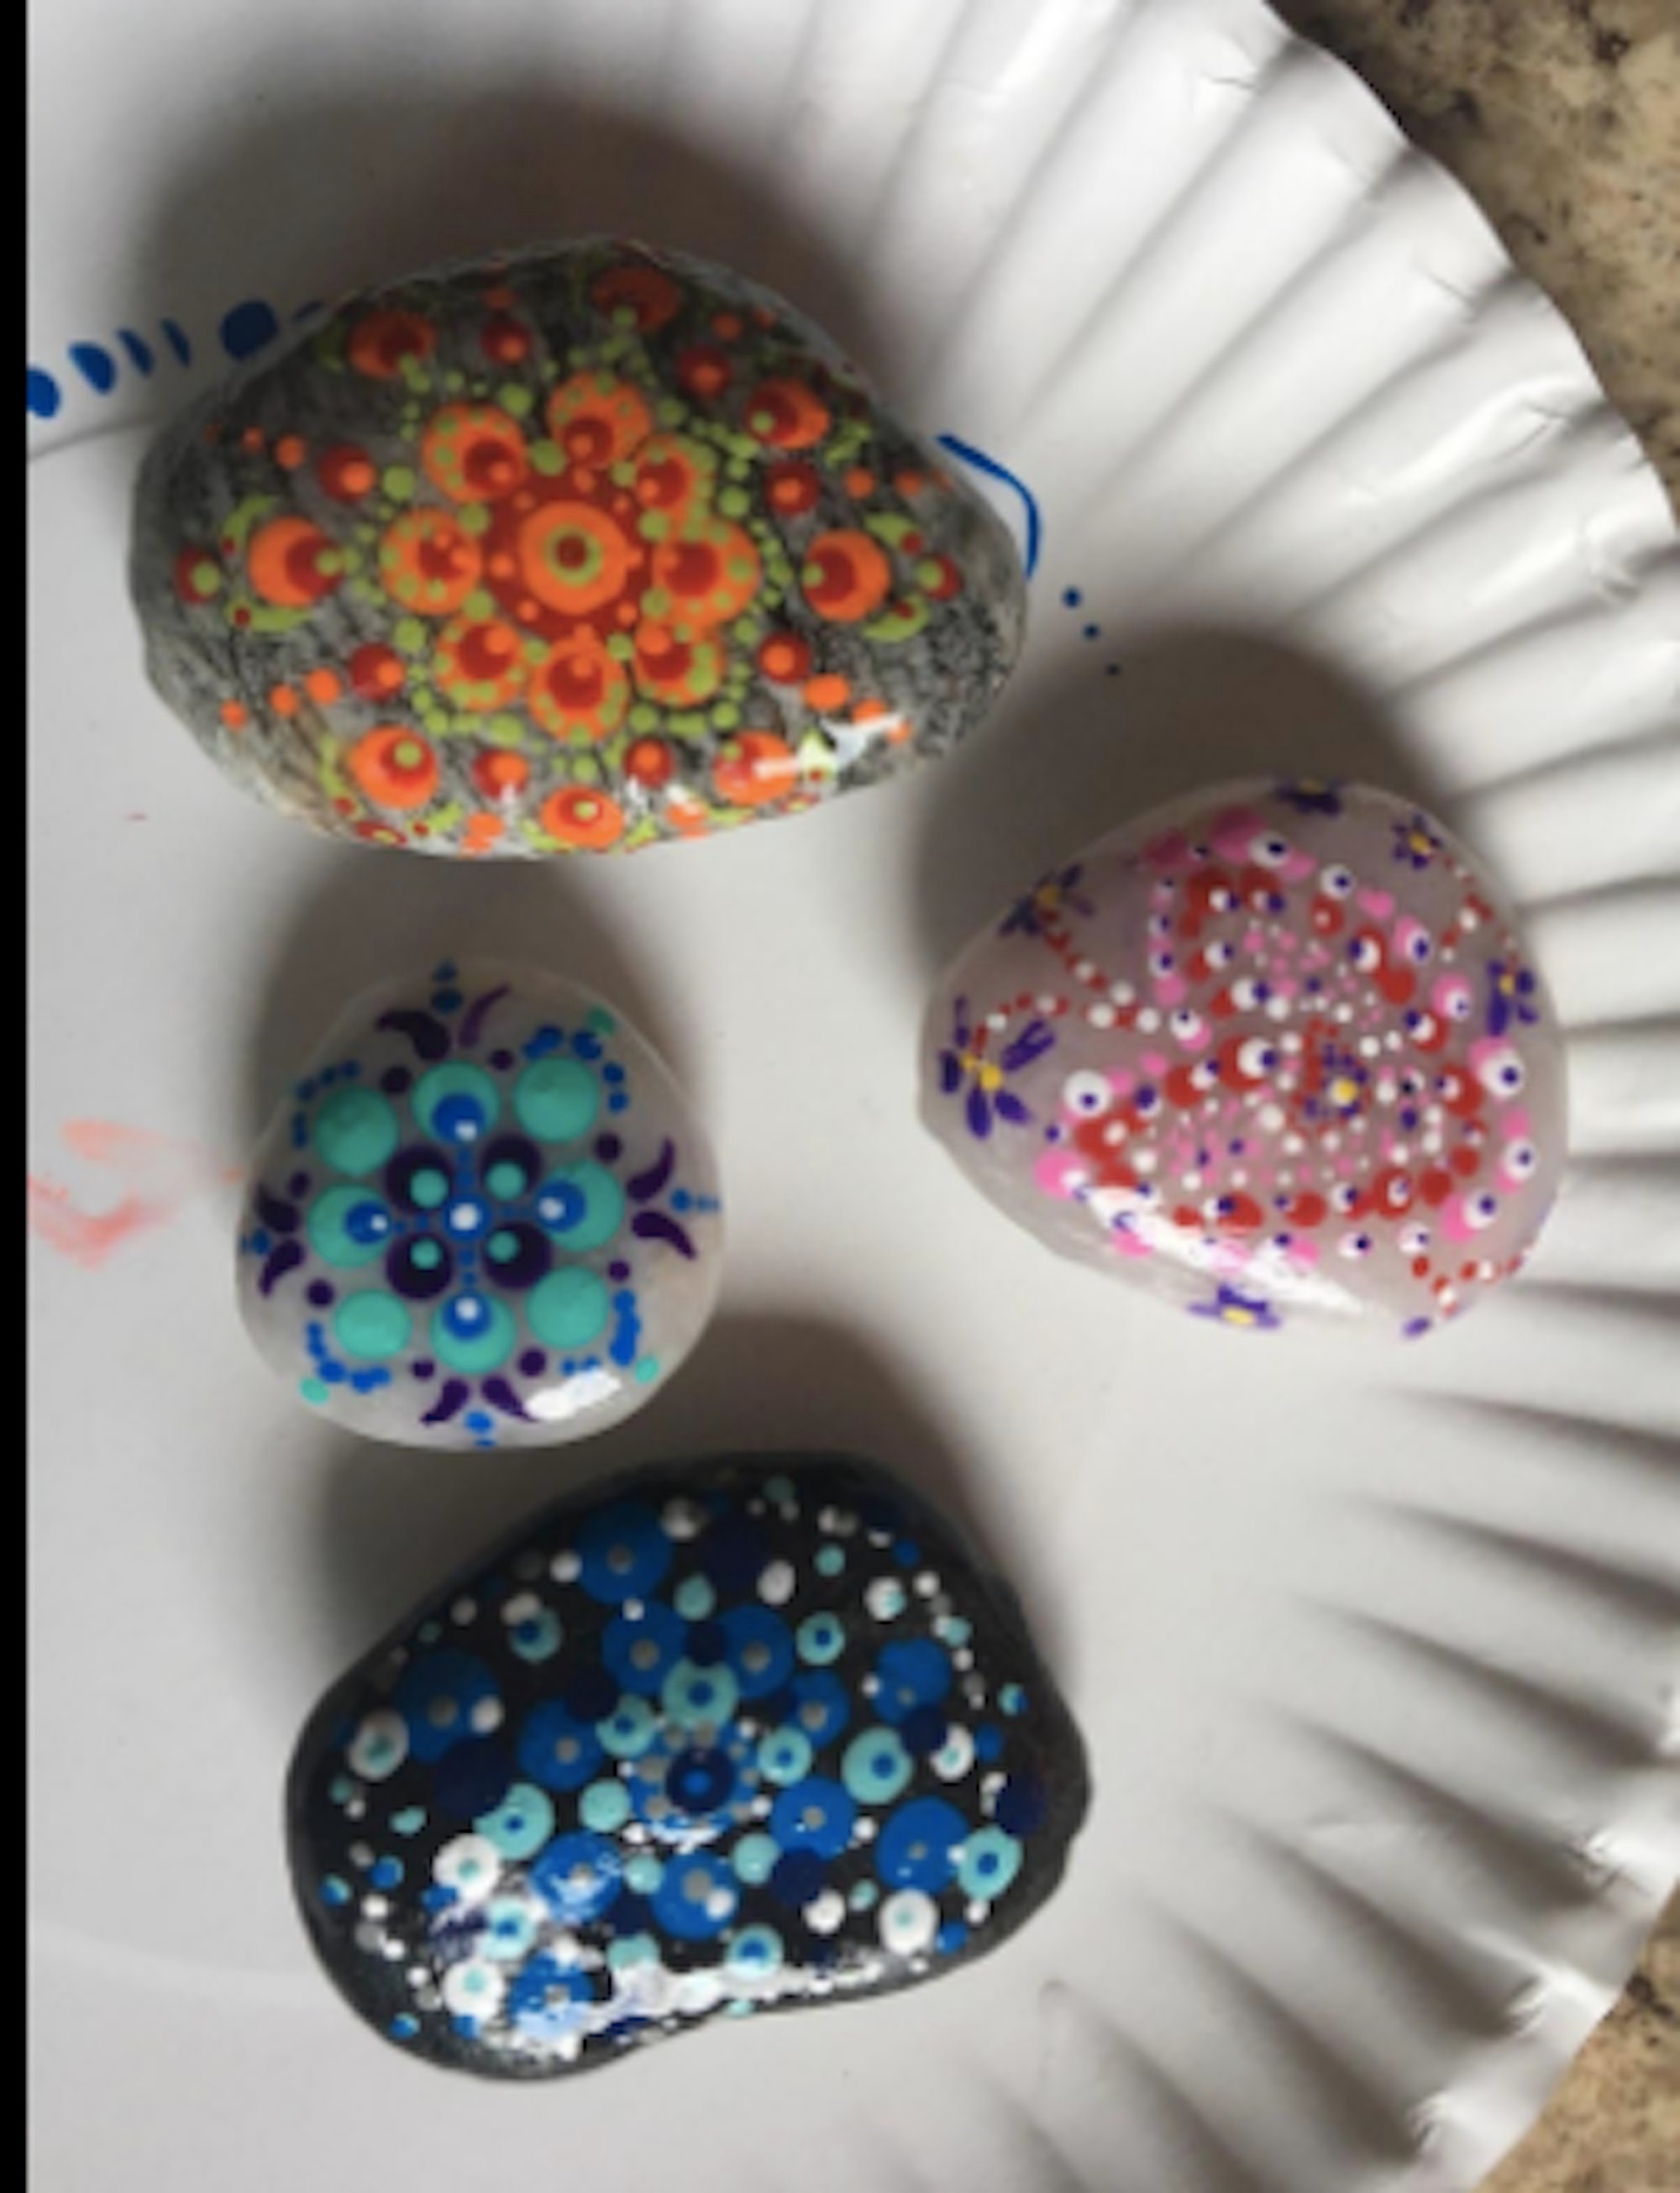 55PCS Mandala Dotting Tools Rock Painting Kit with India